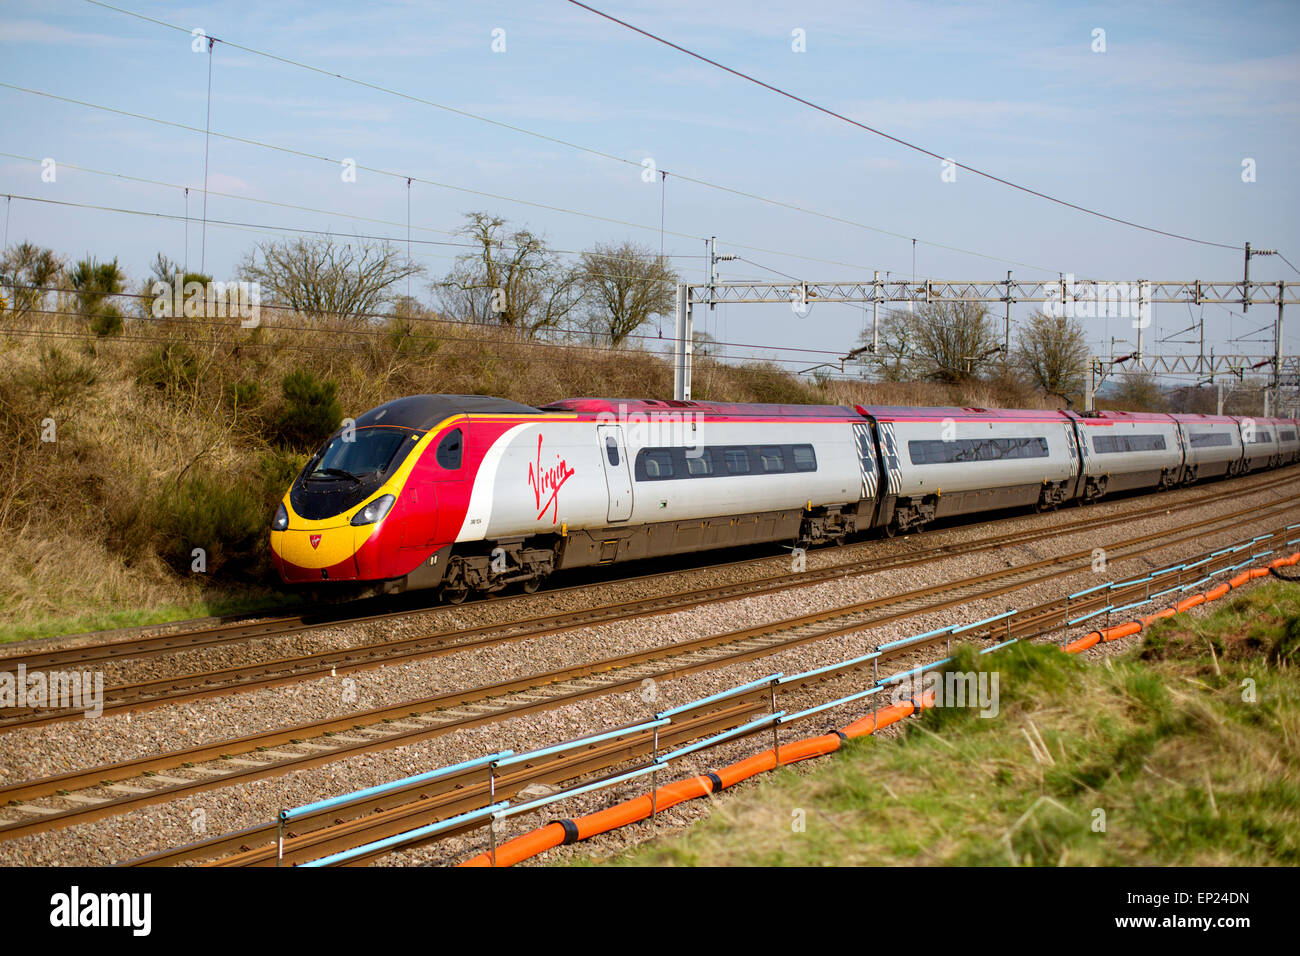 Virgin Rail high speed train in motion in UK Stock Photo